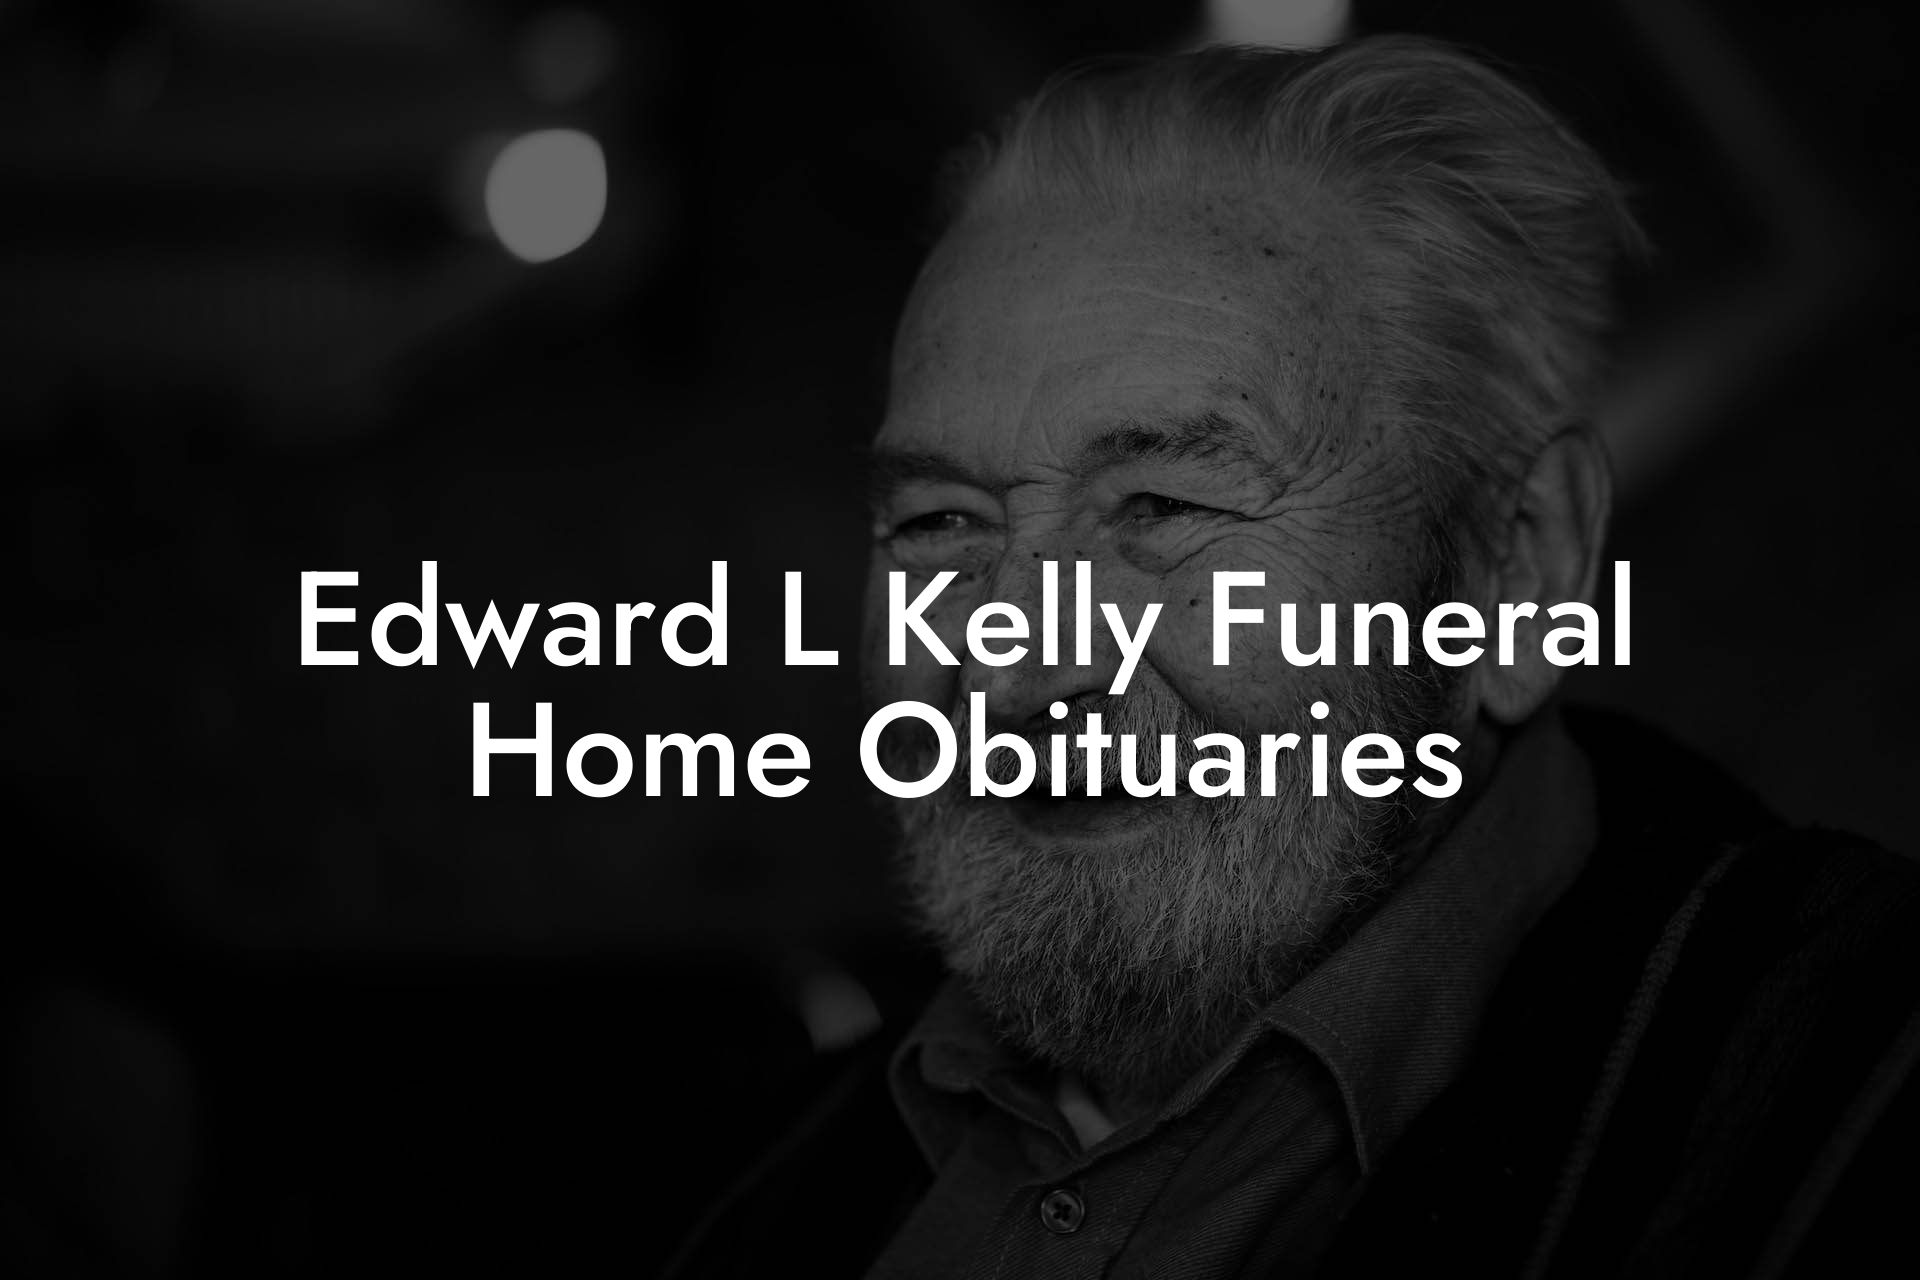 Edward L Kelly Funeral Home Obituaries